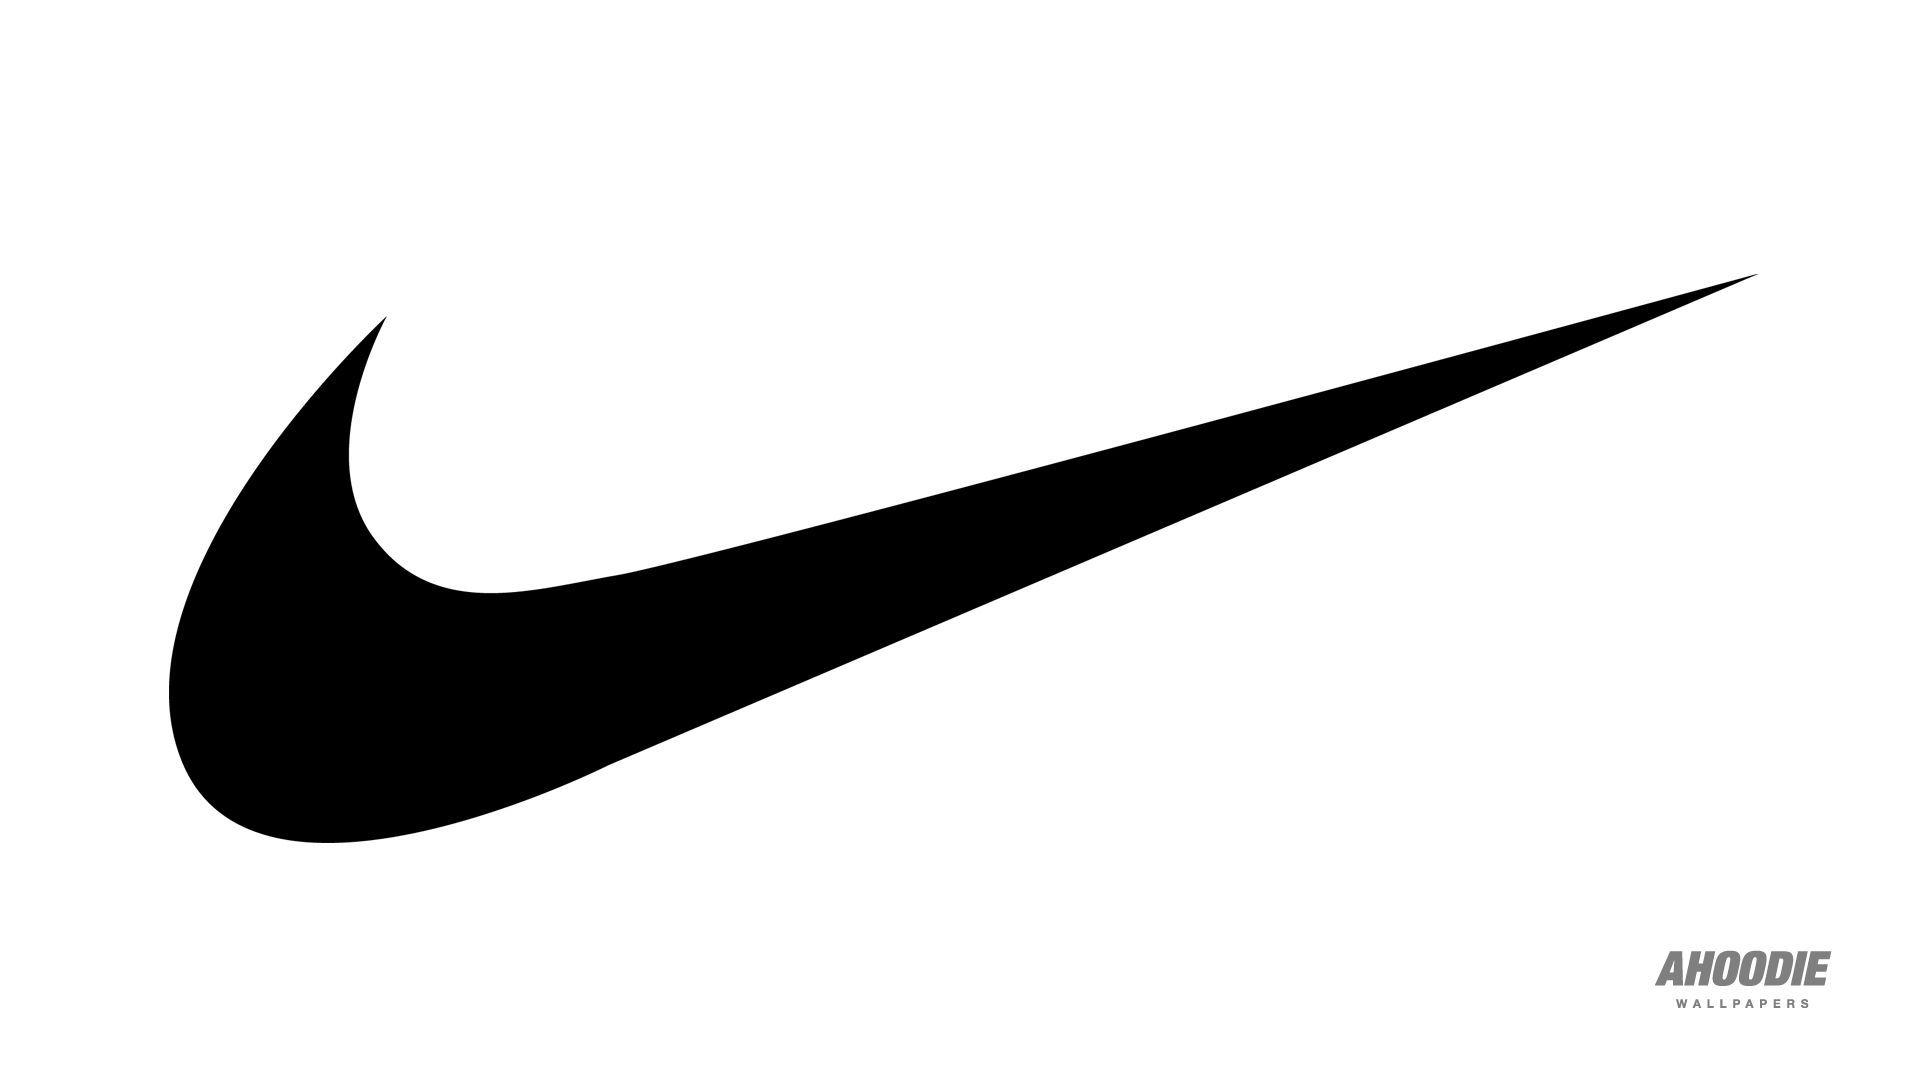 Nike Logo 74 101791 Image HD Wallpaper. Wallfoy.com